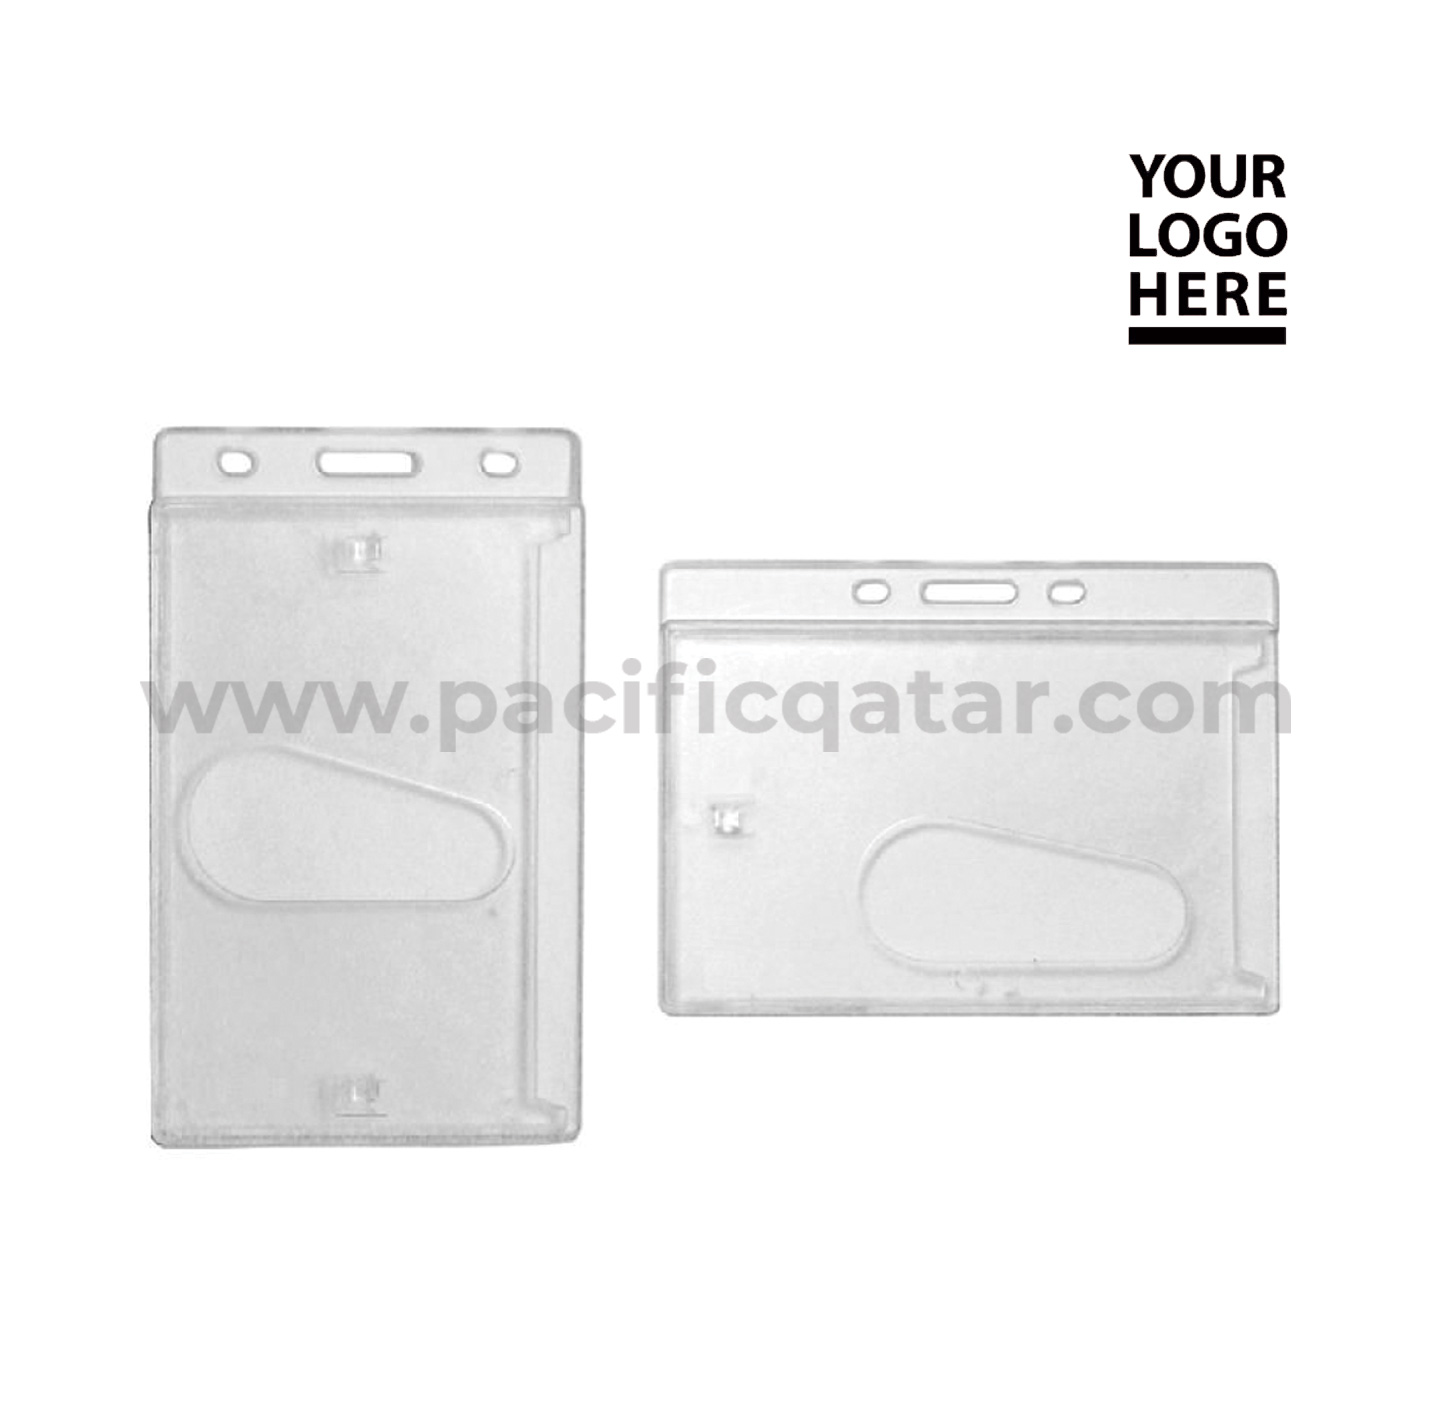 PVC ID Card Holders